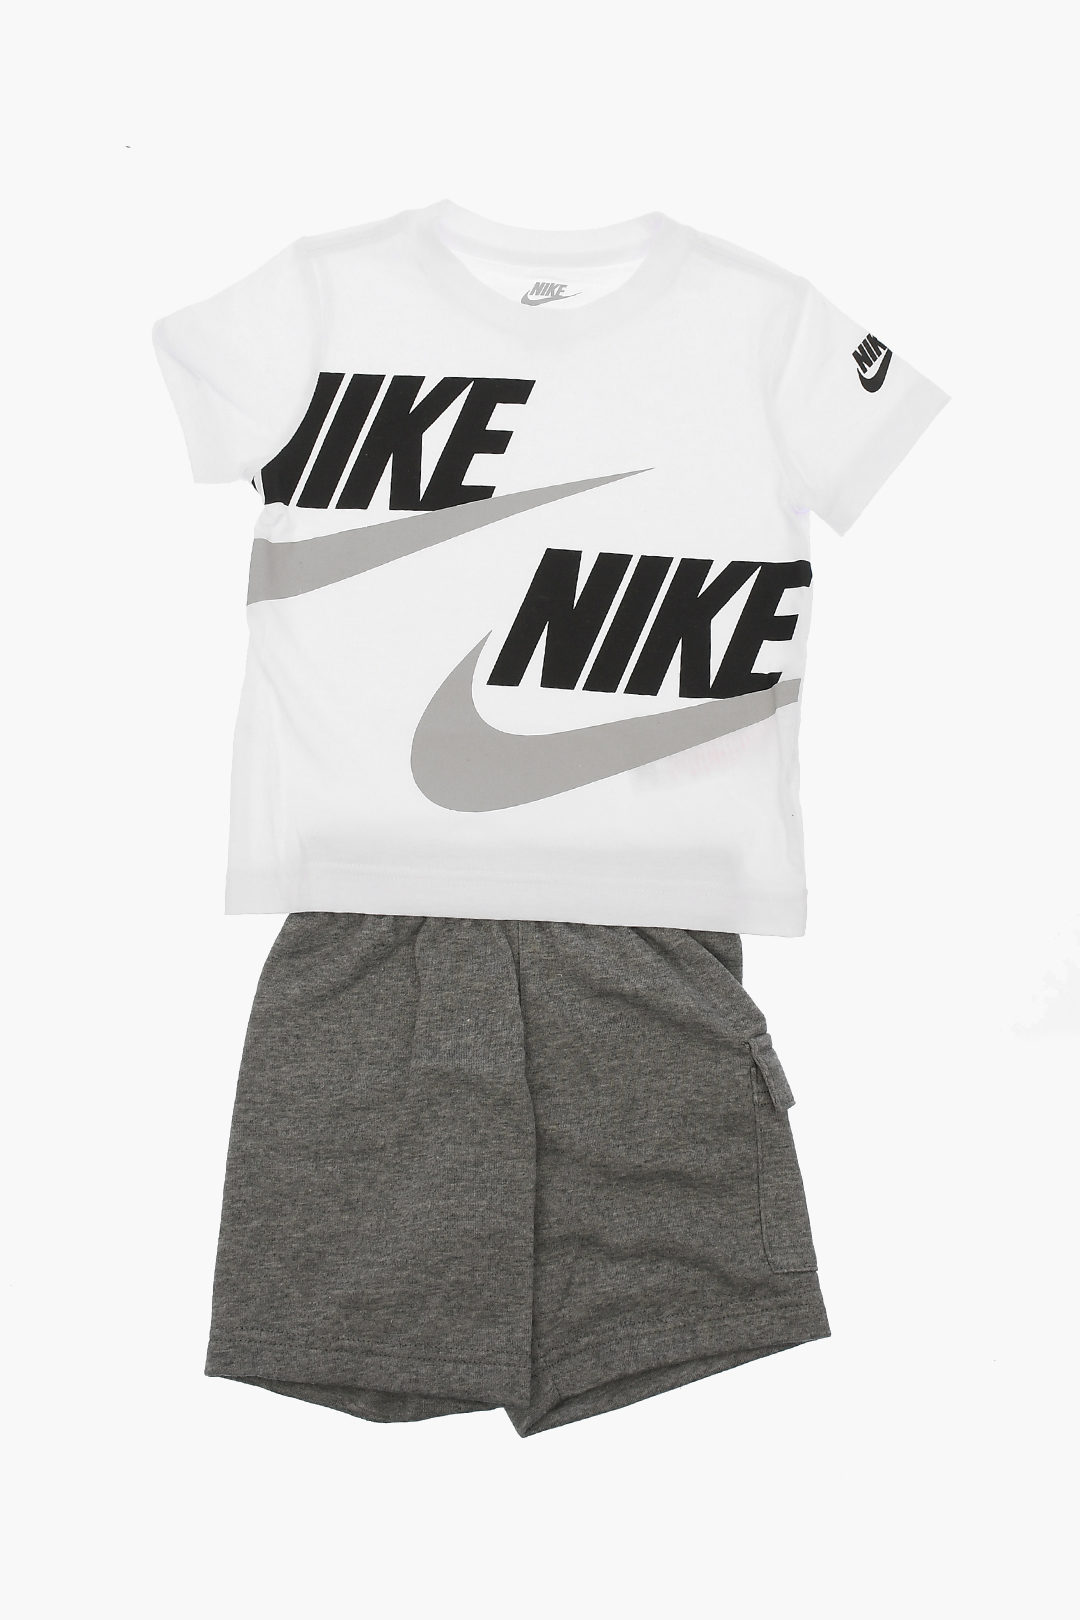 Nike KIDS t-shirt and Shorts Set -